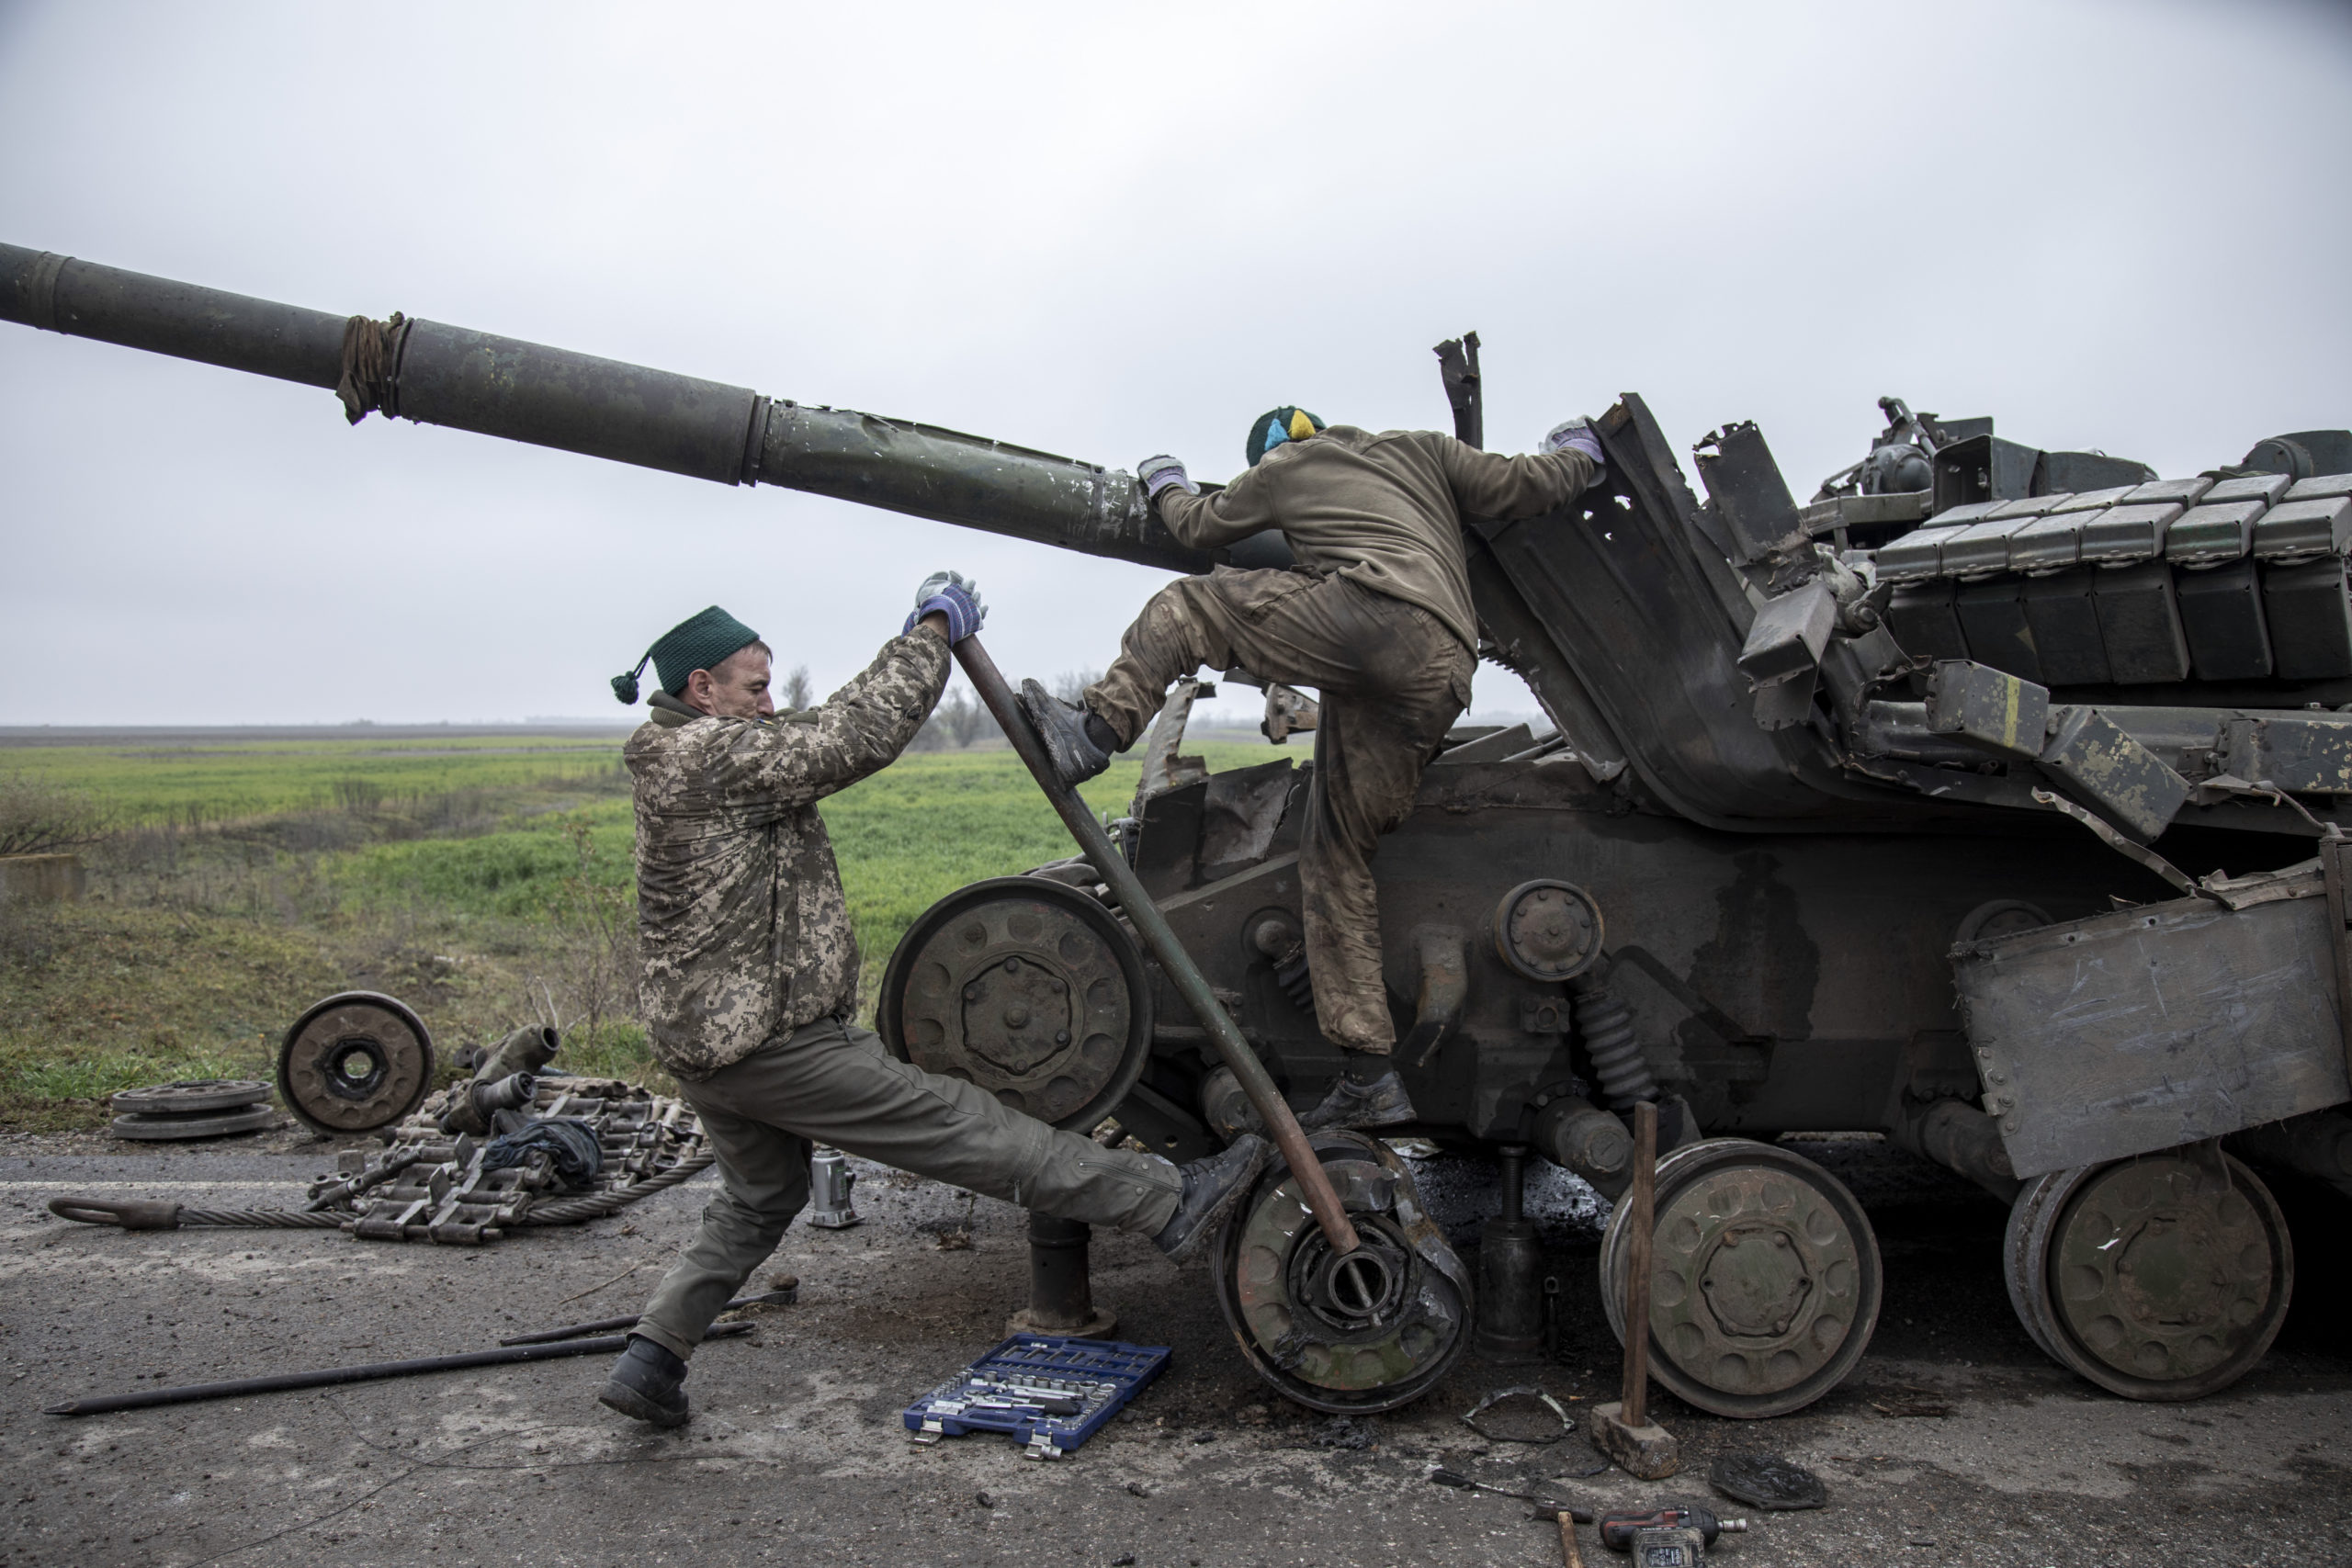 Humanitarian aid and war scenes continue in Ukraine